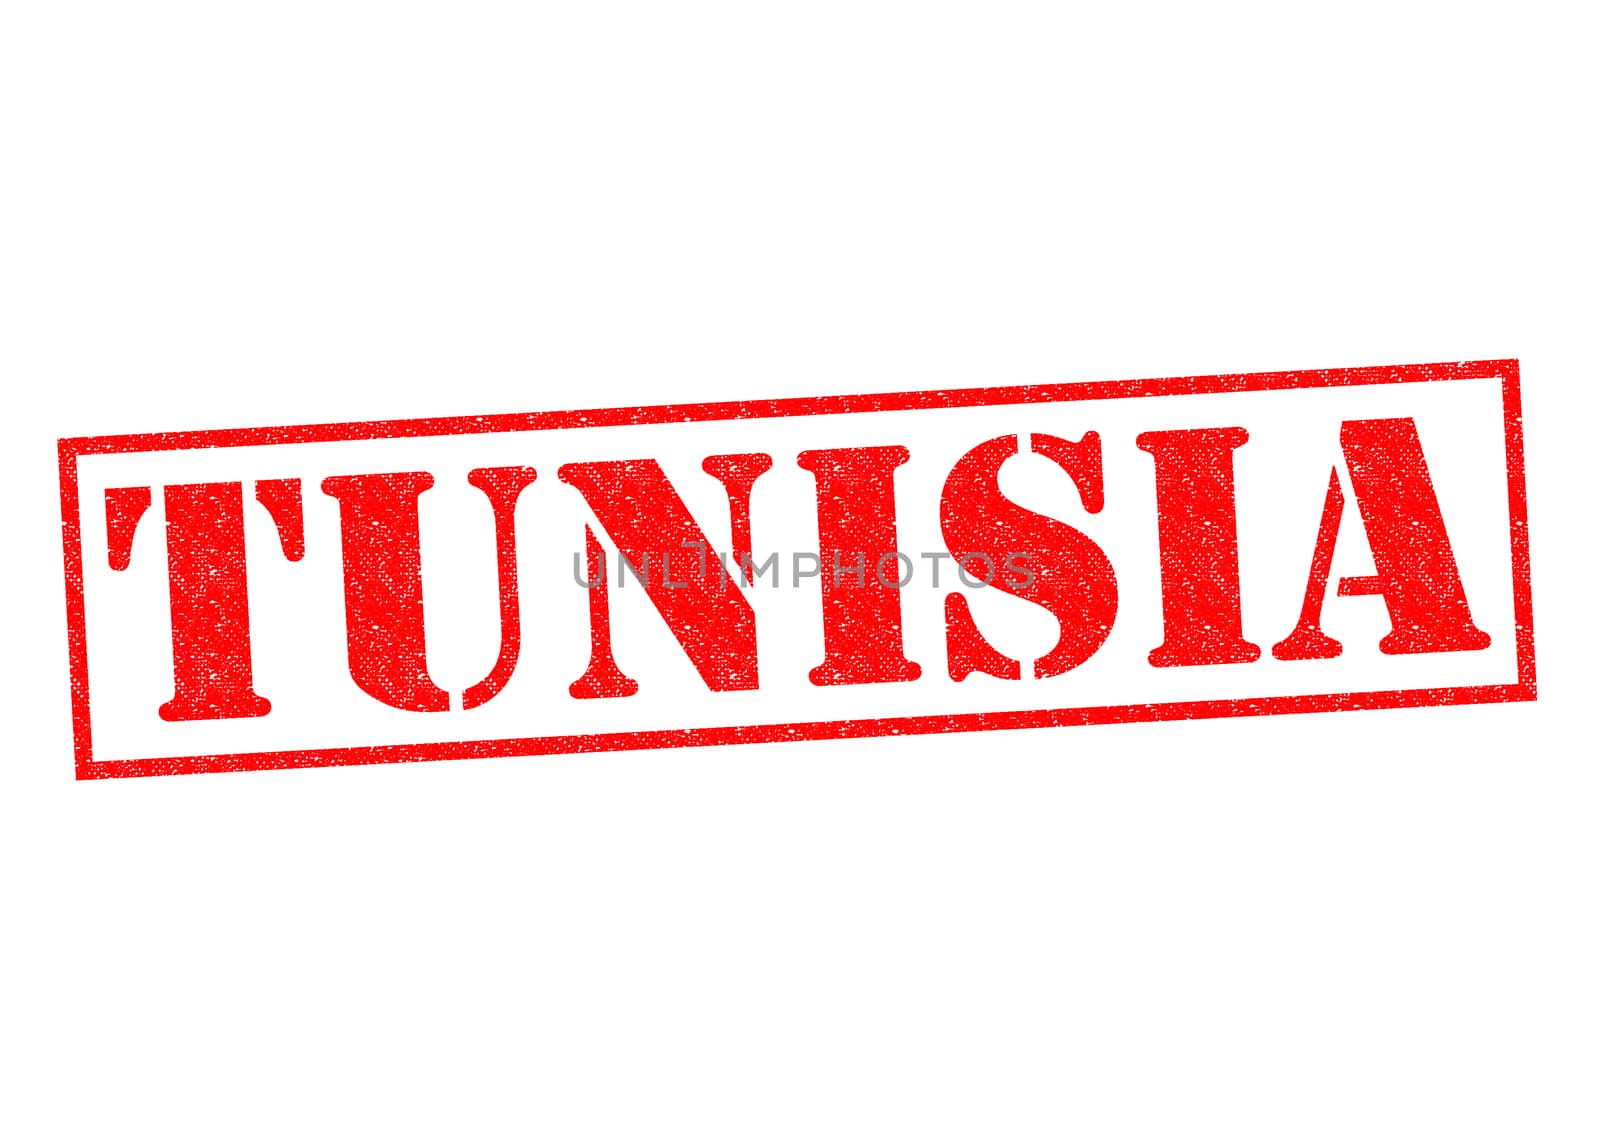 TUNISIA by chrisdorney